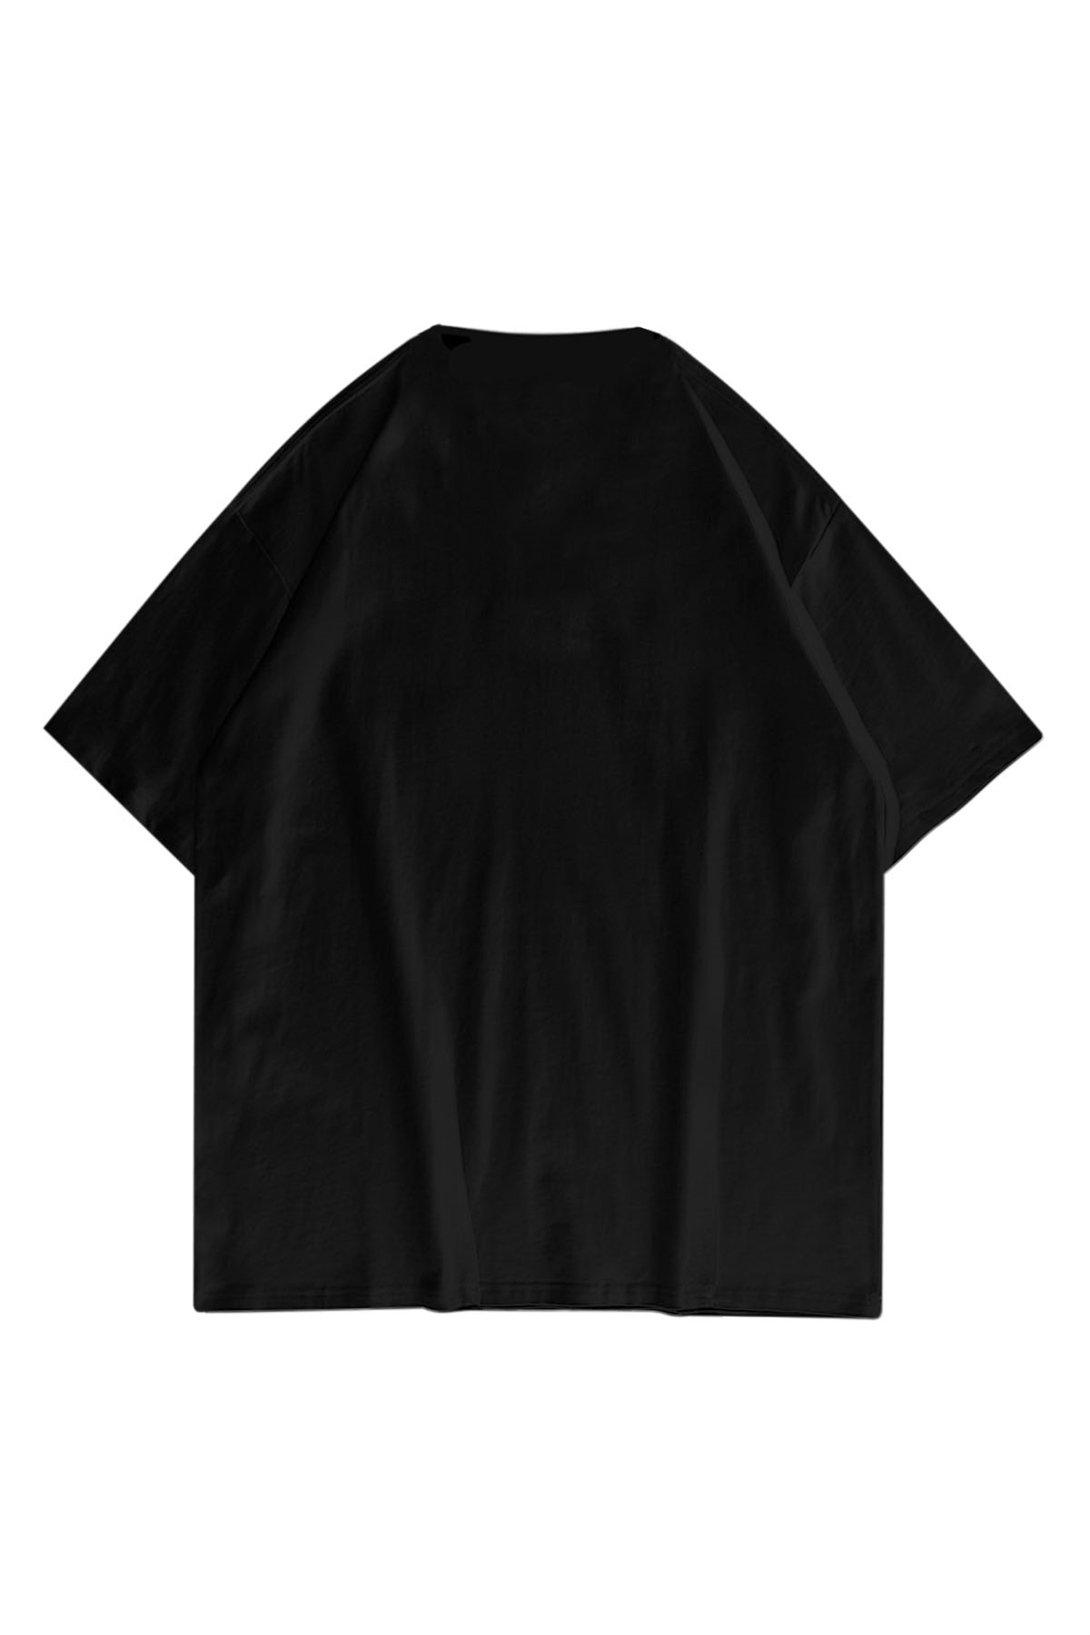 Trendiz Unisex Astroworld Album Cover Siyah Tshirt